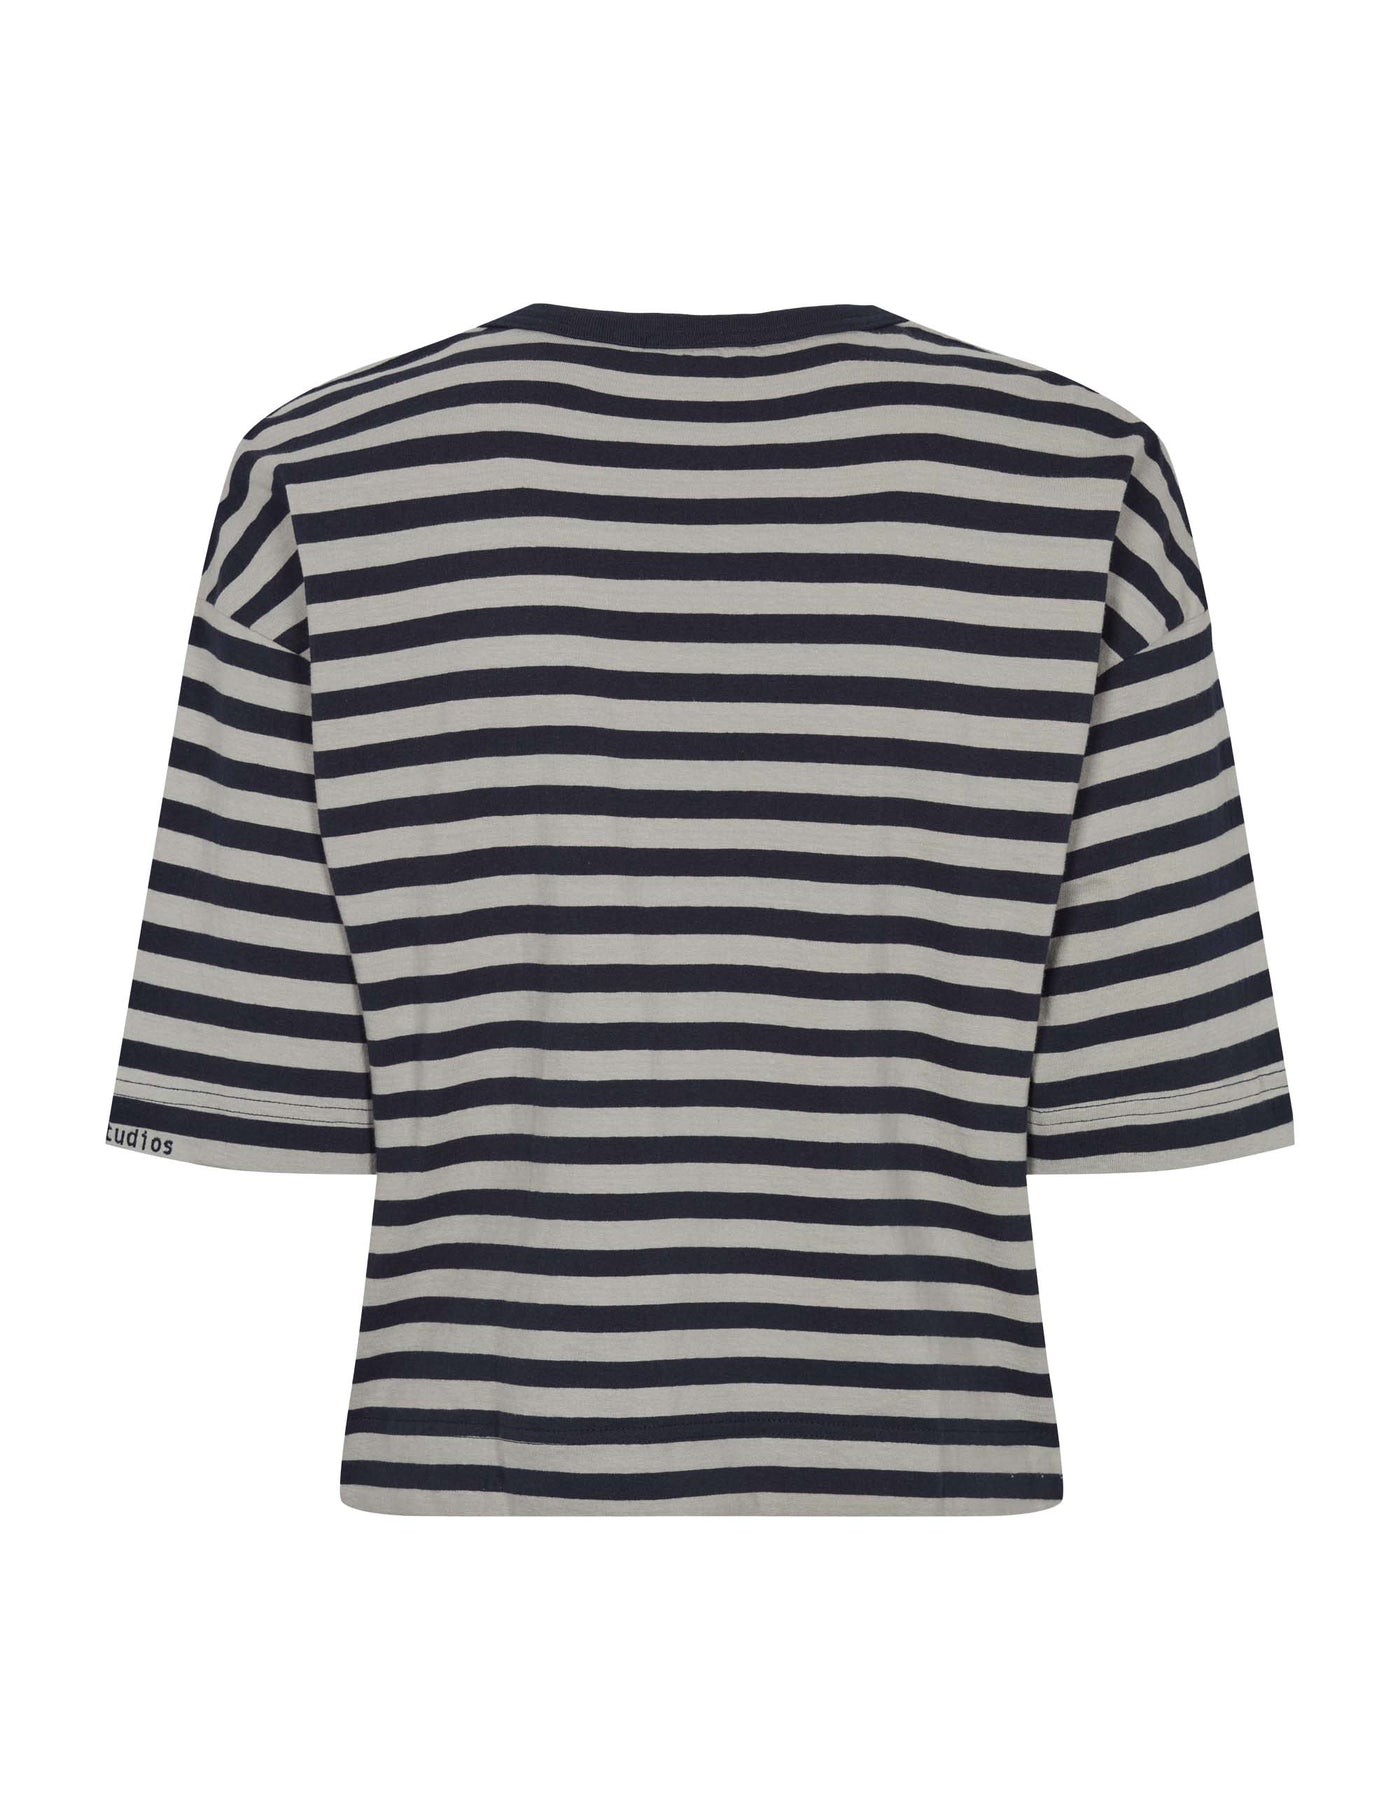 esmé studios ESSigne Striped Boxy T-shirt - GOTS T-shirt and Tops 209 Dark Sapphire Stripe